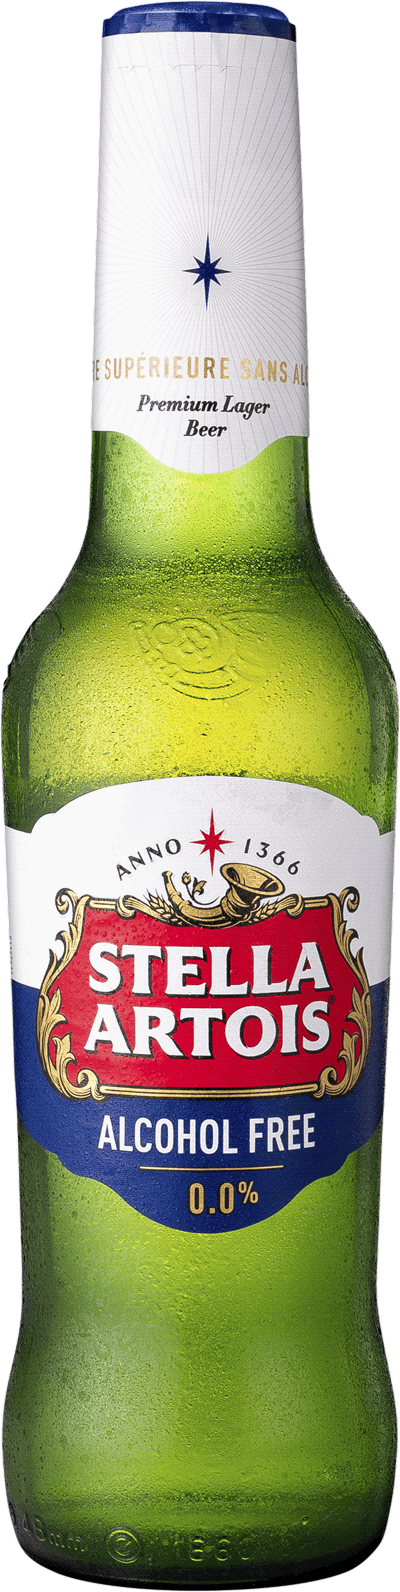 Stella Artois Alcohol Free